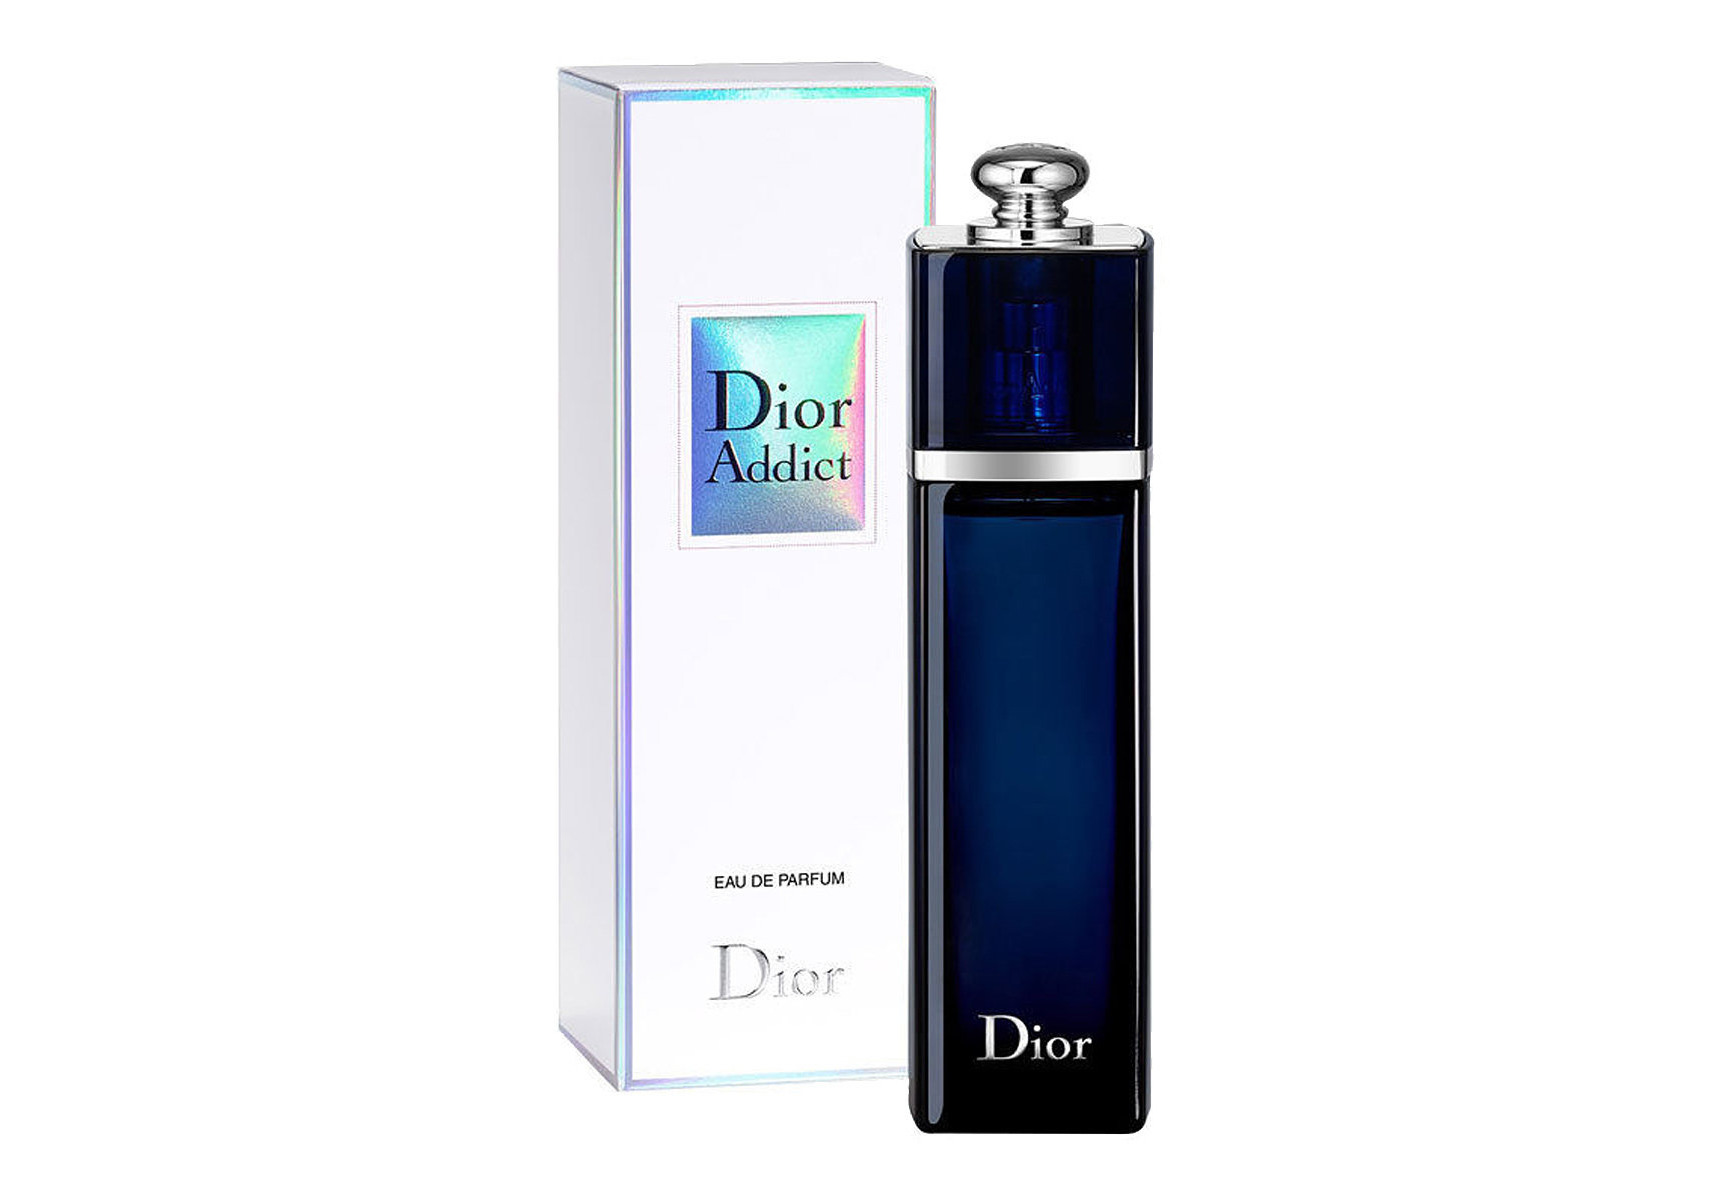 Dior addict цены. Christian Dior Dior Addict Eau de Parfum. Christian Dior Addict Eau Parfum. Christian Dior Addict 100 ml EDP. Christian Dior "Dior Addict" 100 ml.